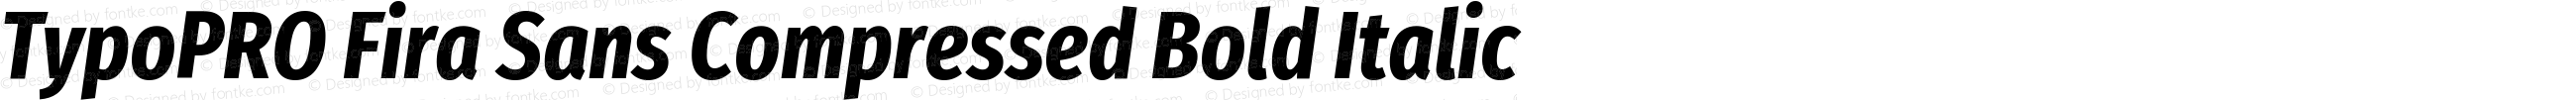 TypoPRO Fira Sans Compressed Bold Italic